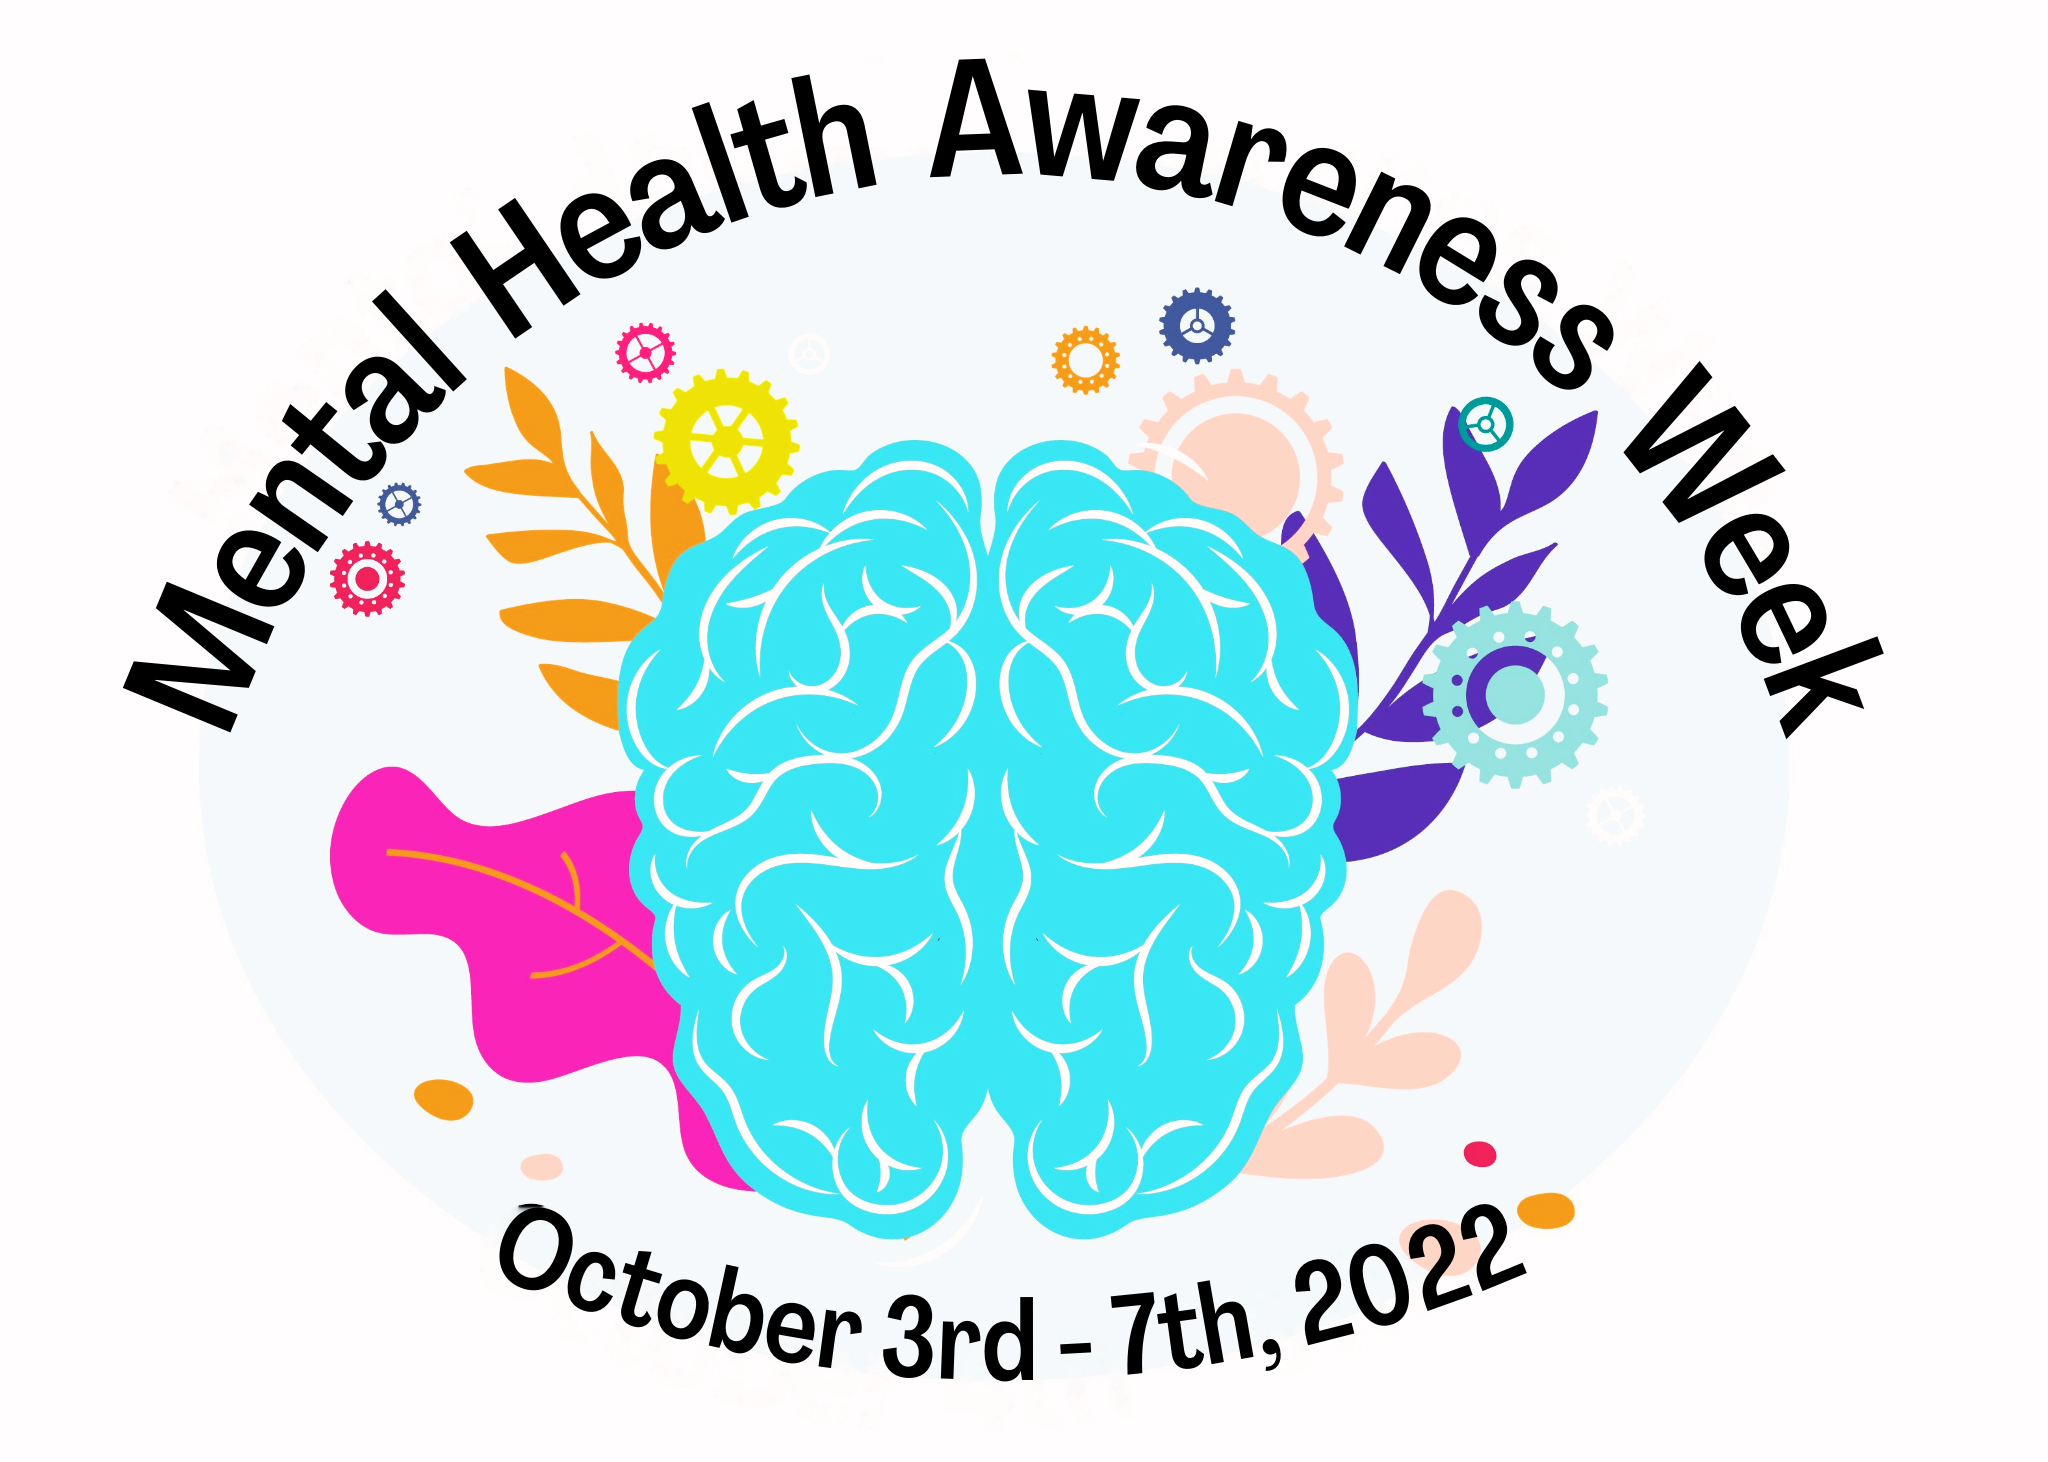 Flyer outlining Mental Health Awareness Week events